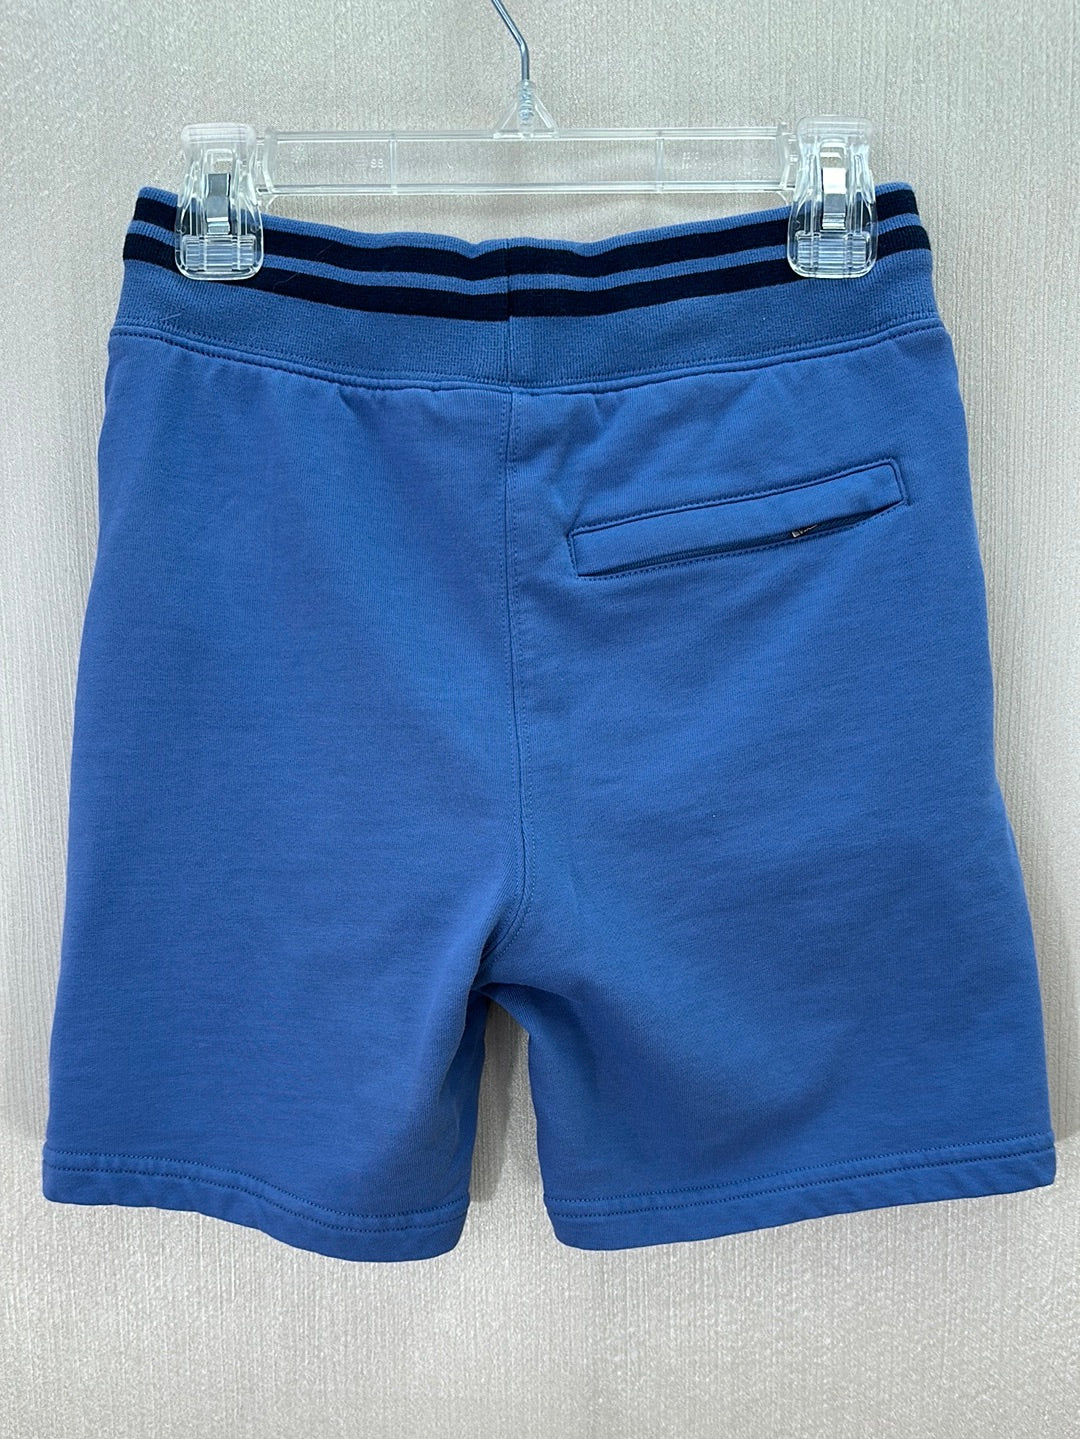 PSYCHO BUNNY blue 100% Cotton Zip Pocket Shorts - Kids S | 7/8